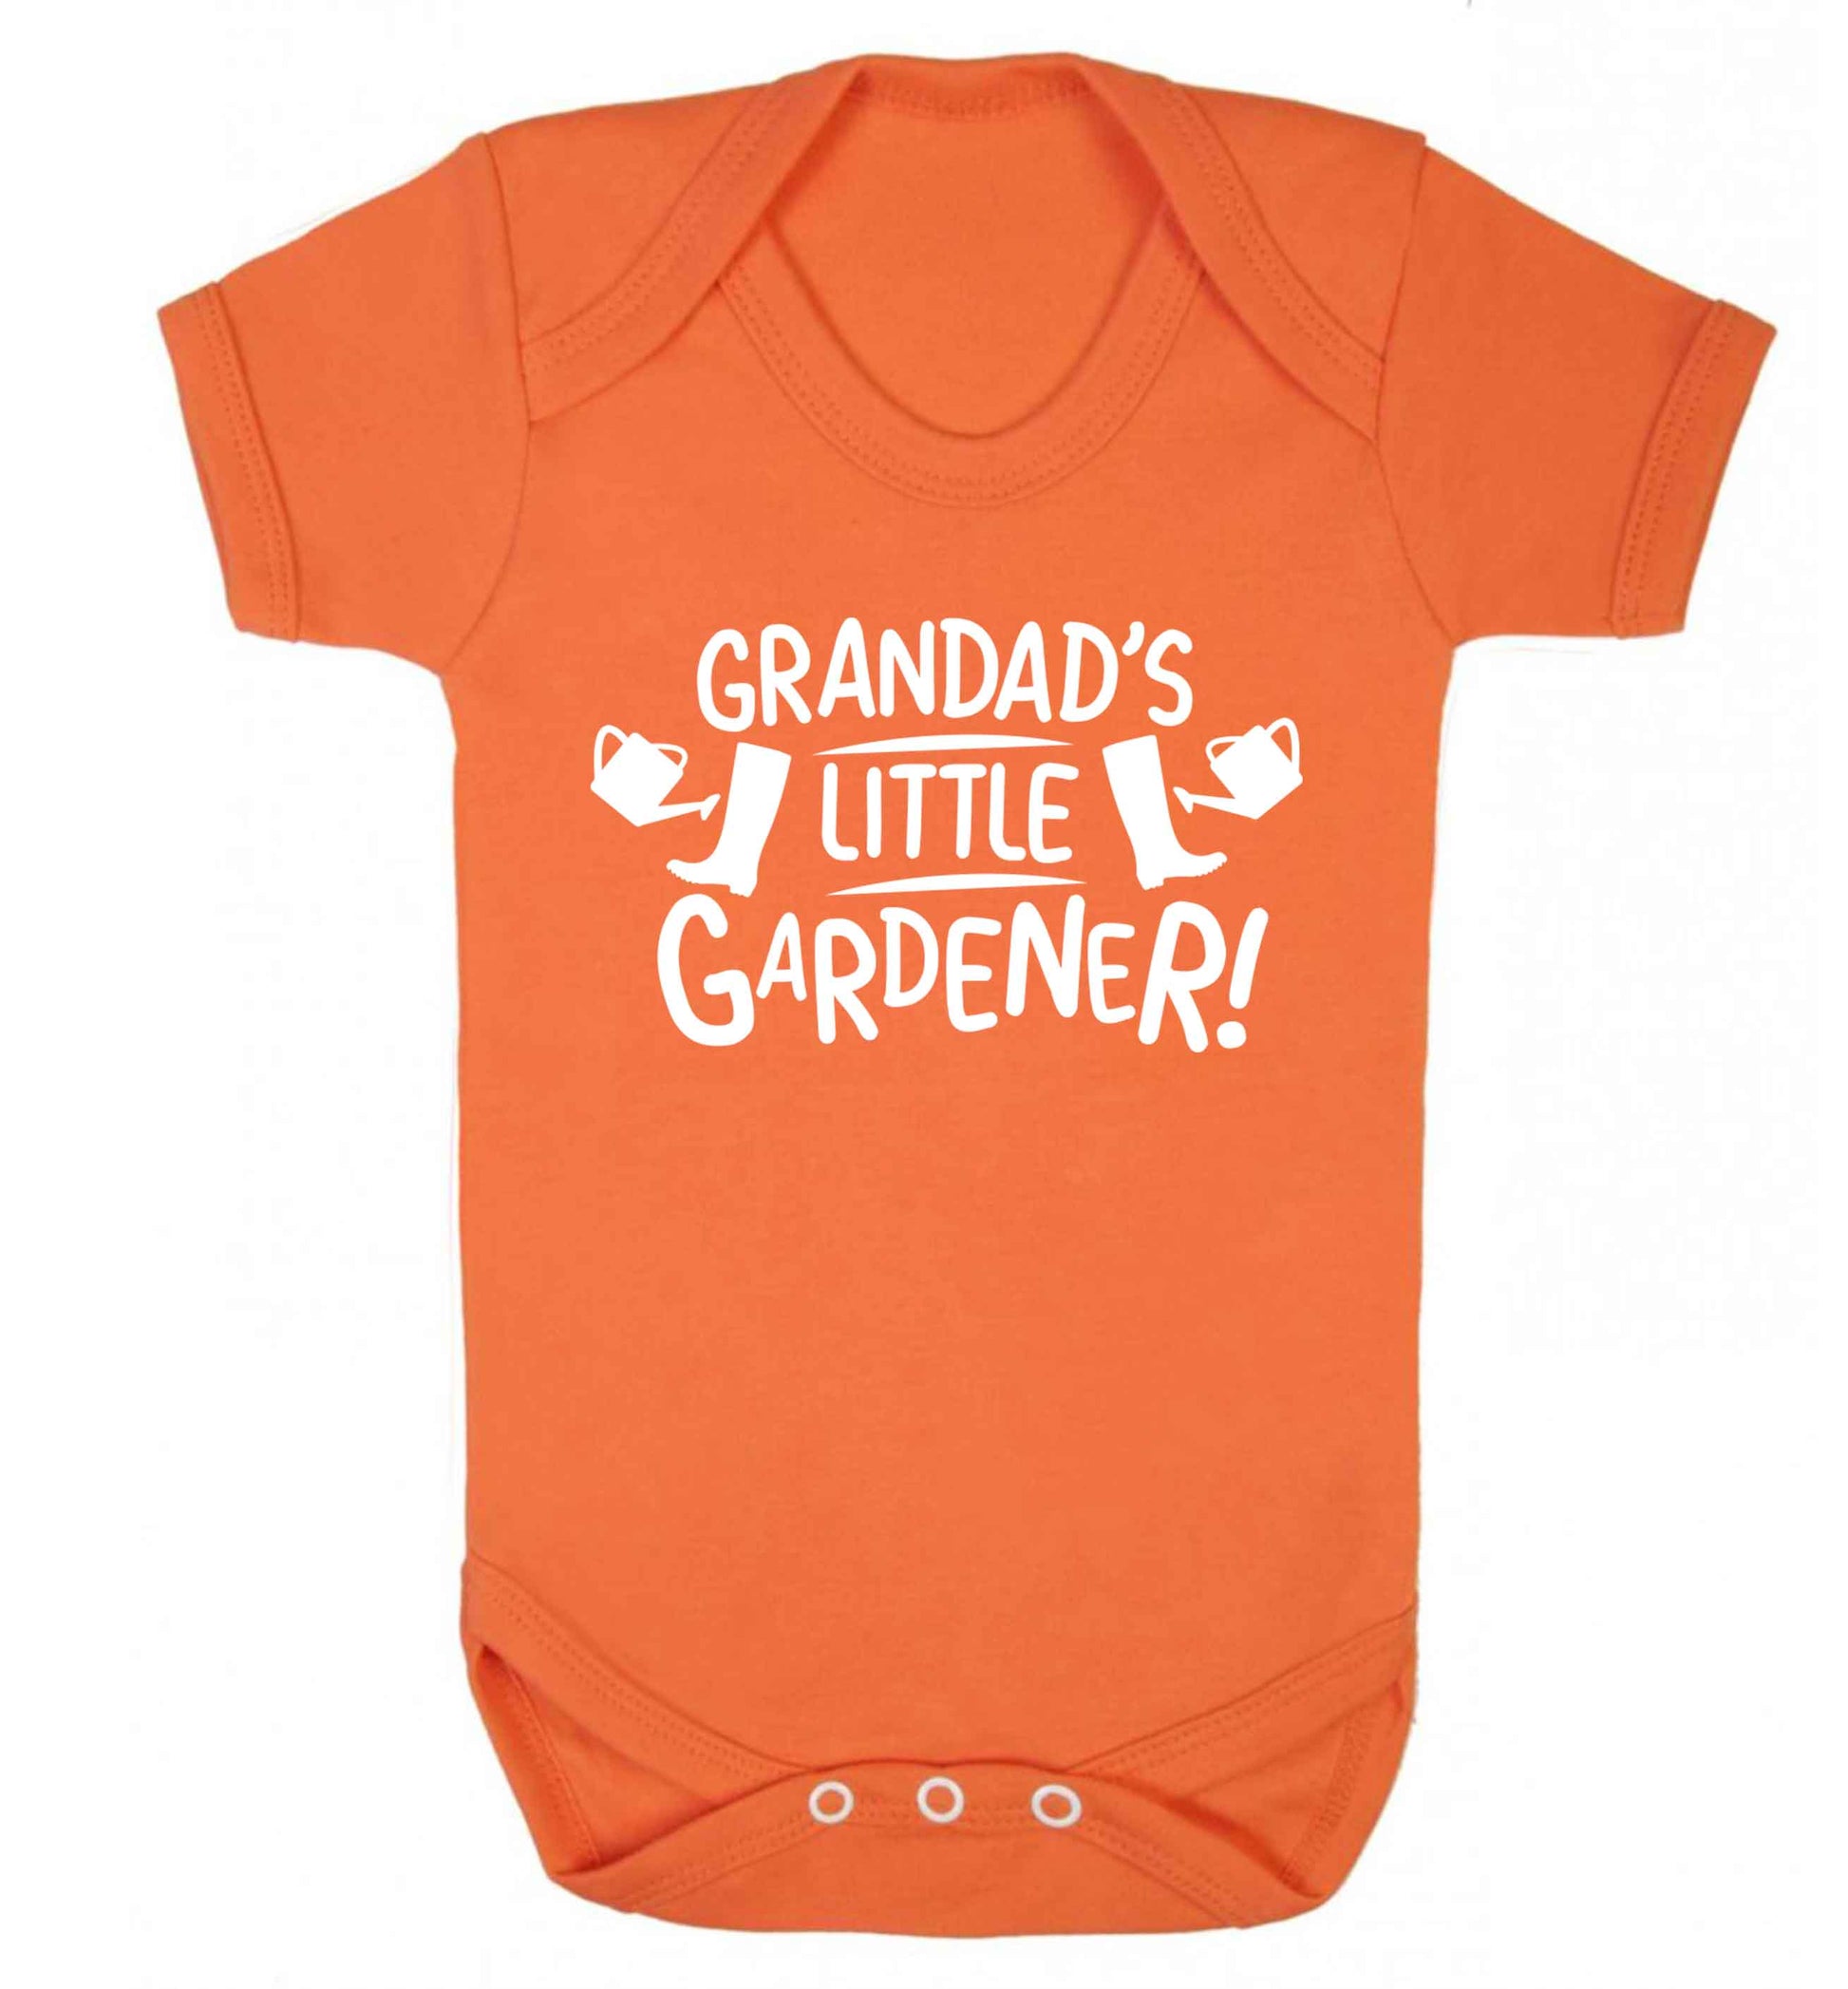 Grandad's little gardener Baby Vest orange 18-24 months